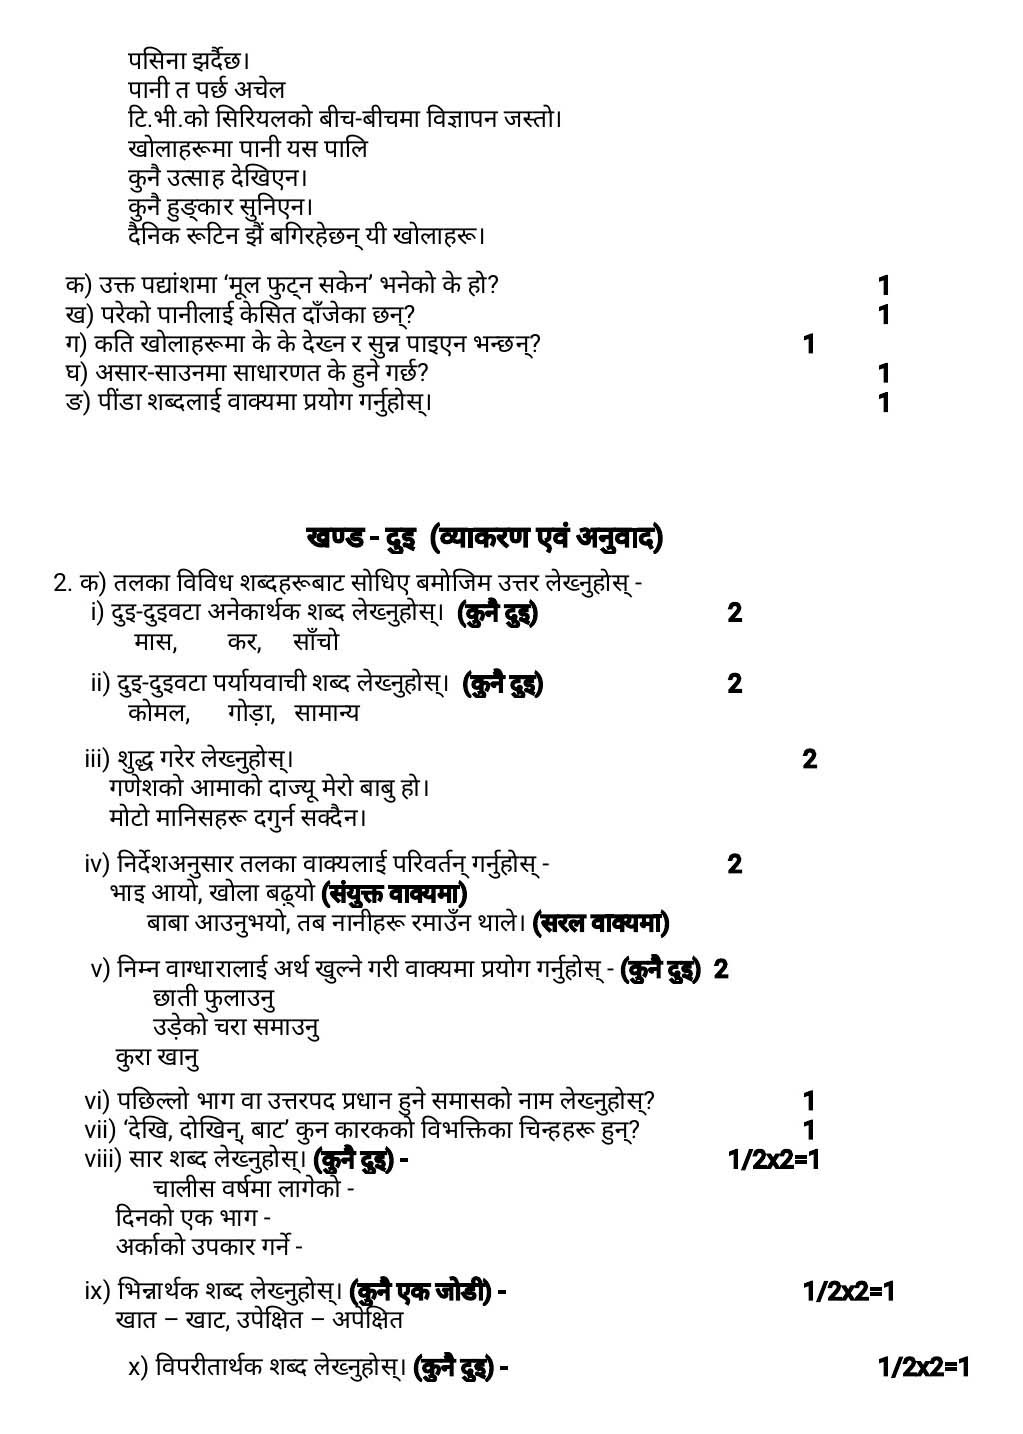 Nepali CBSE Class X Sample Question Paper 2018-19 - Image 2